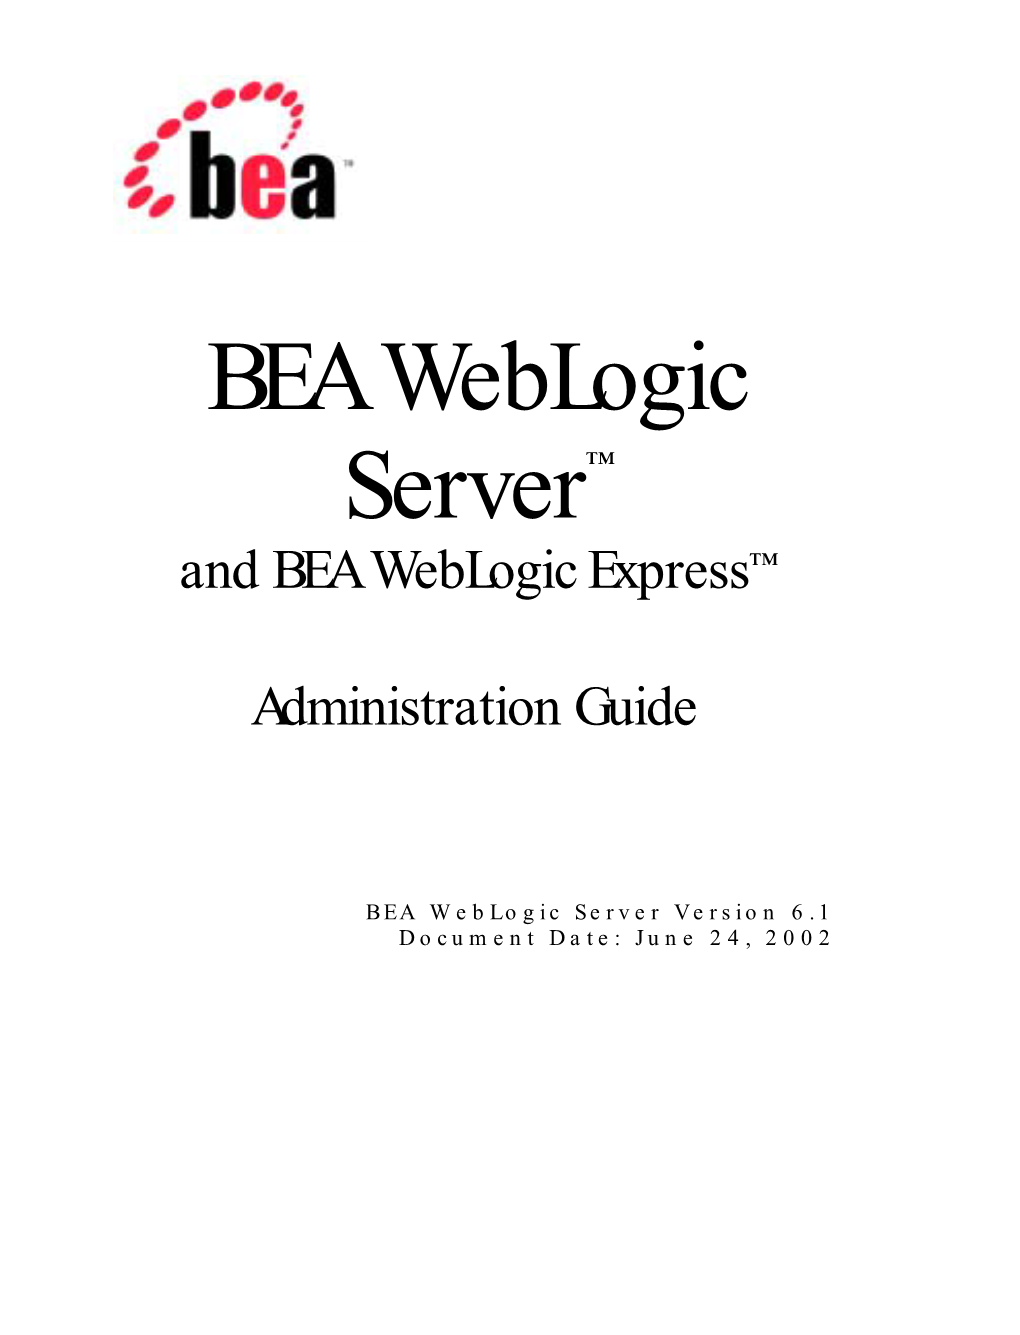 Server™ BEA Weblogic